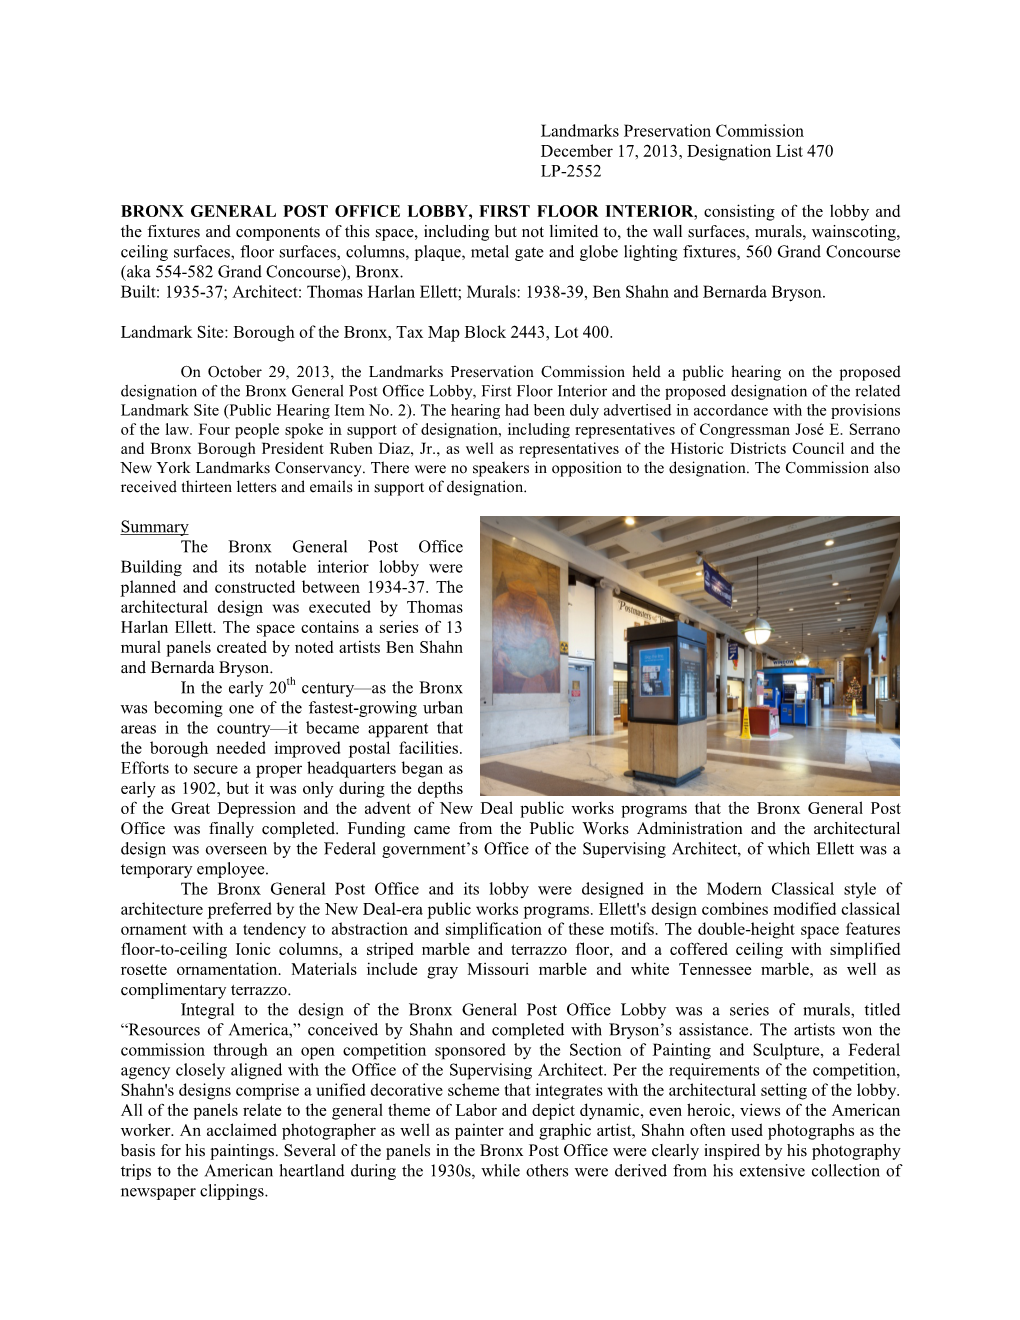 Bronx General Post Office Lobby, First Floor Interior Designation Report